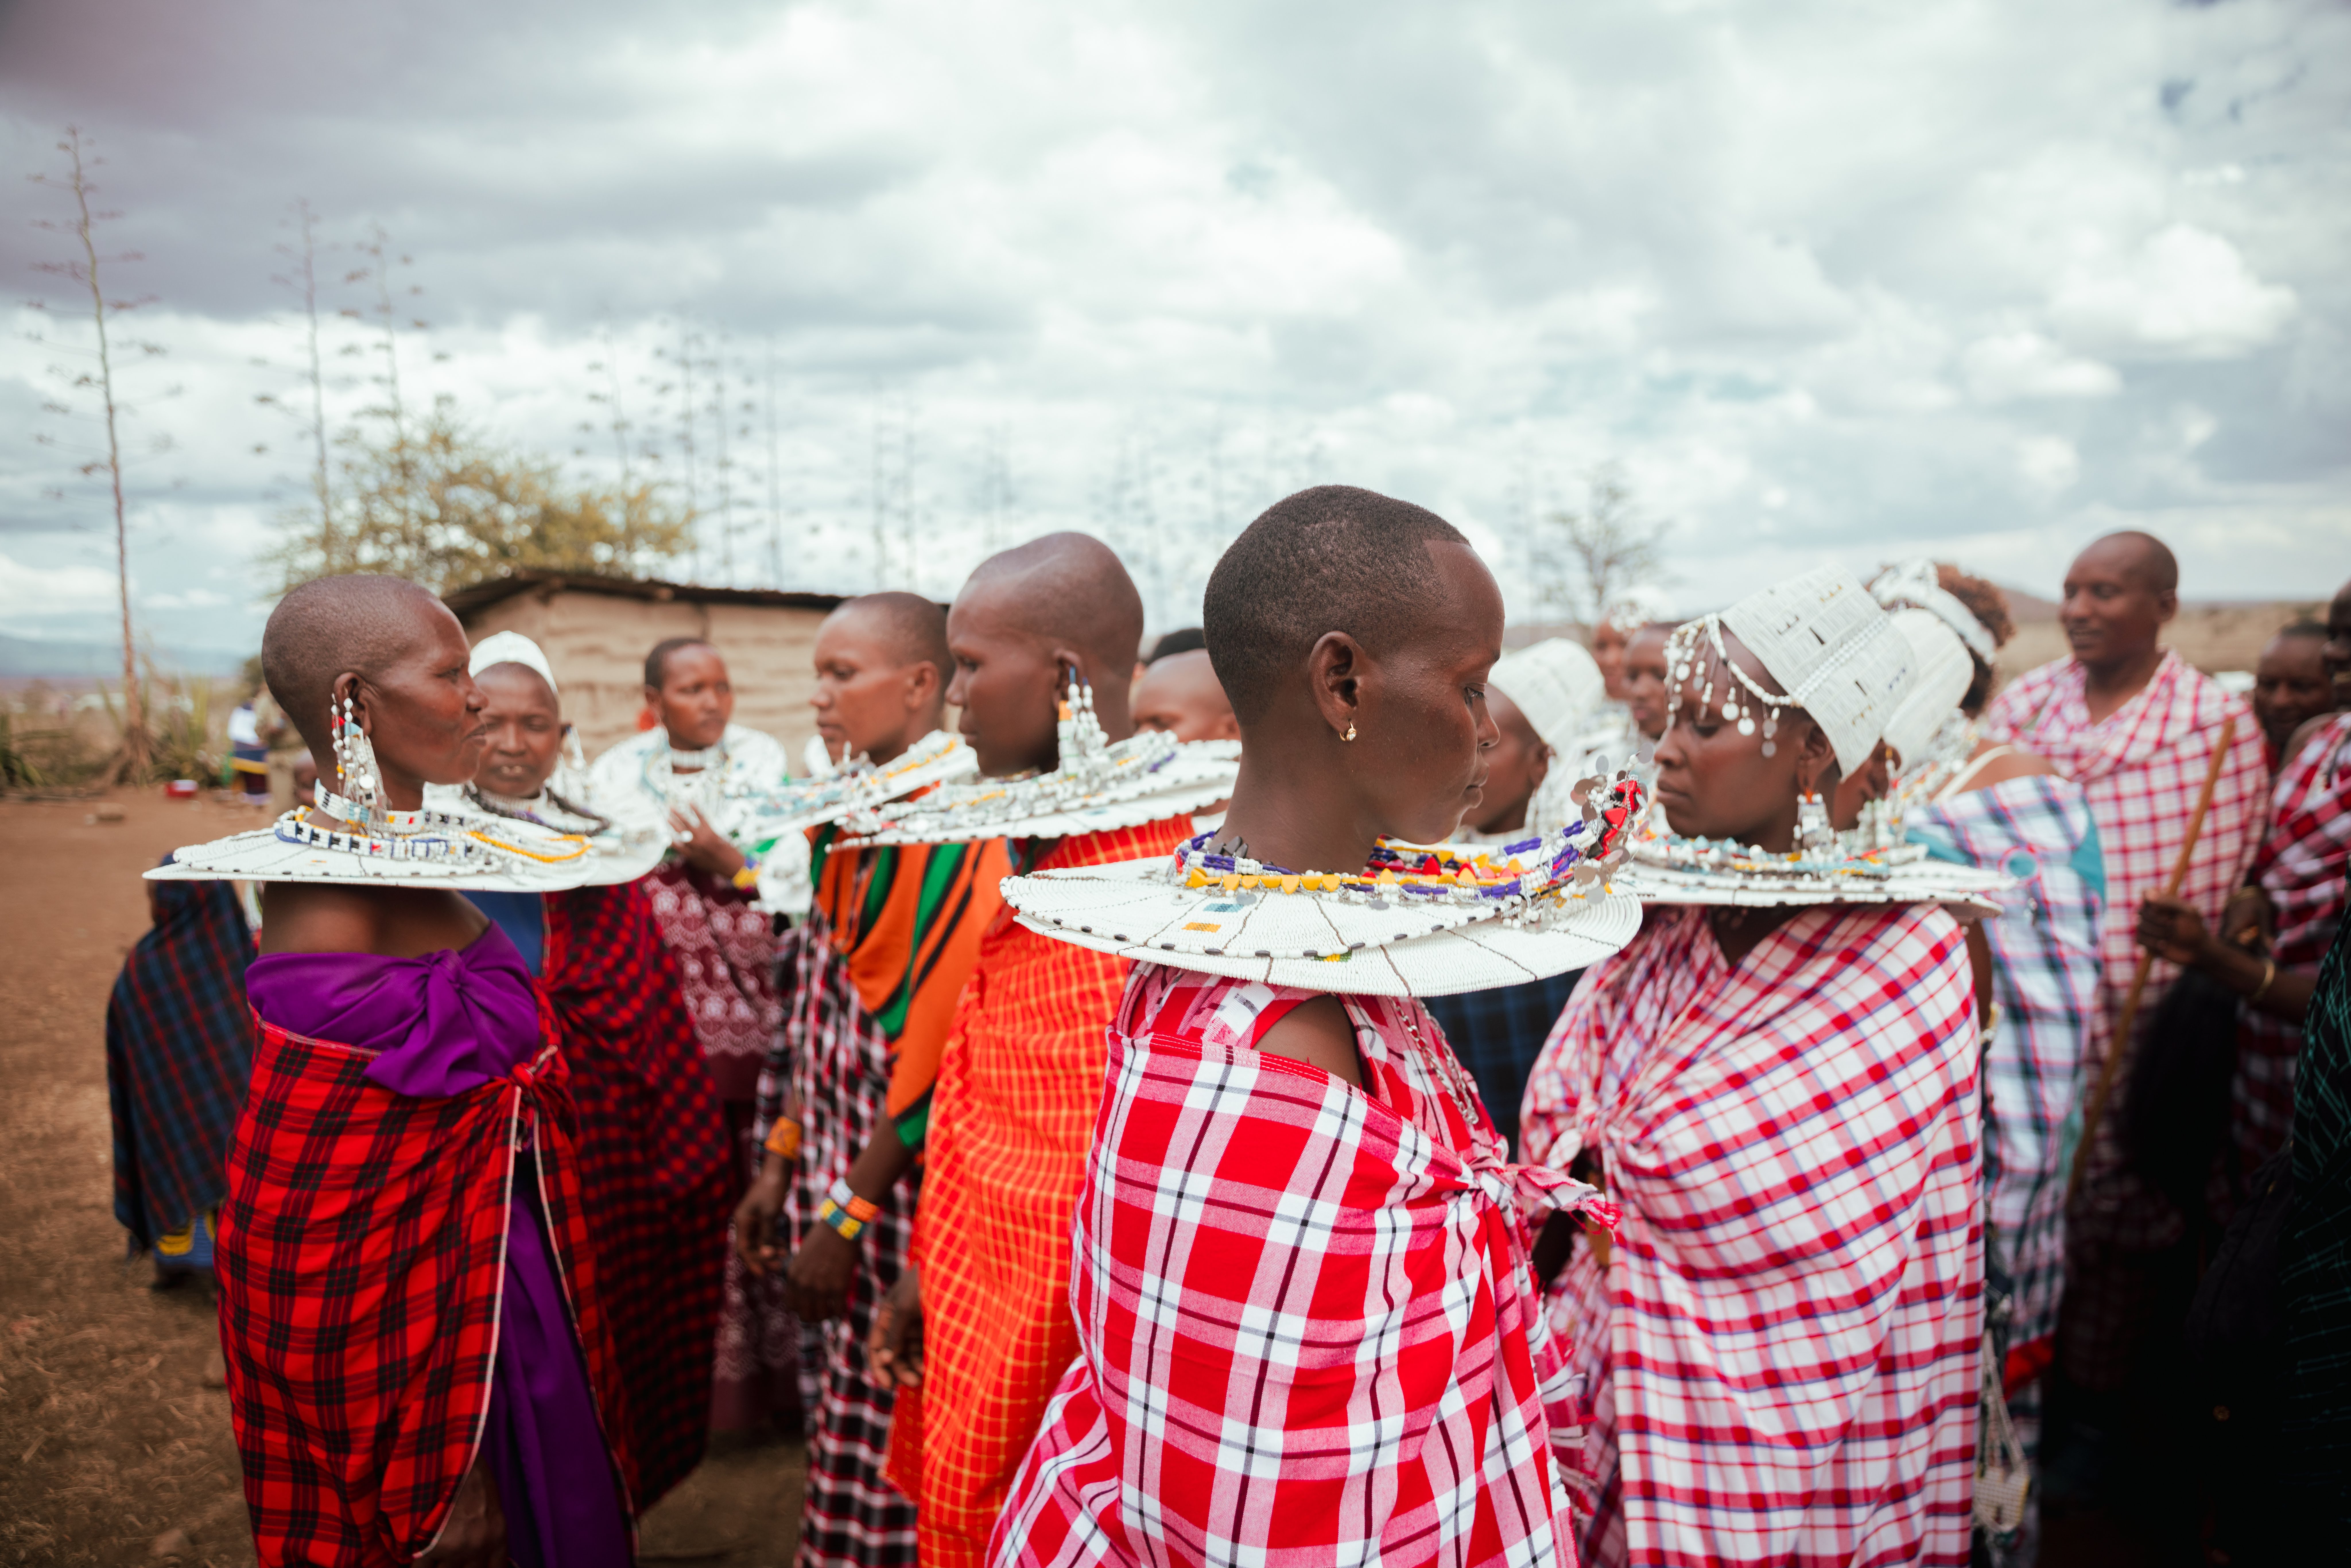 Maasai Wear, Jewelery, Clothing and Accessories